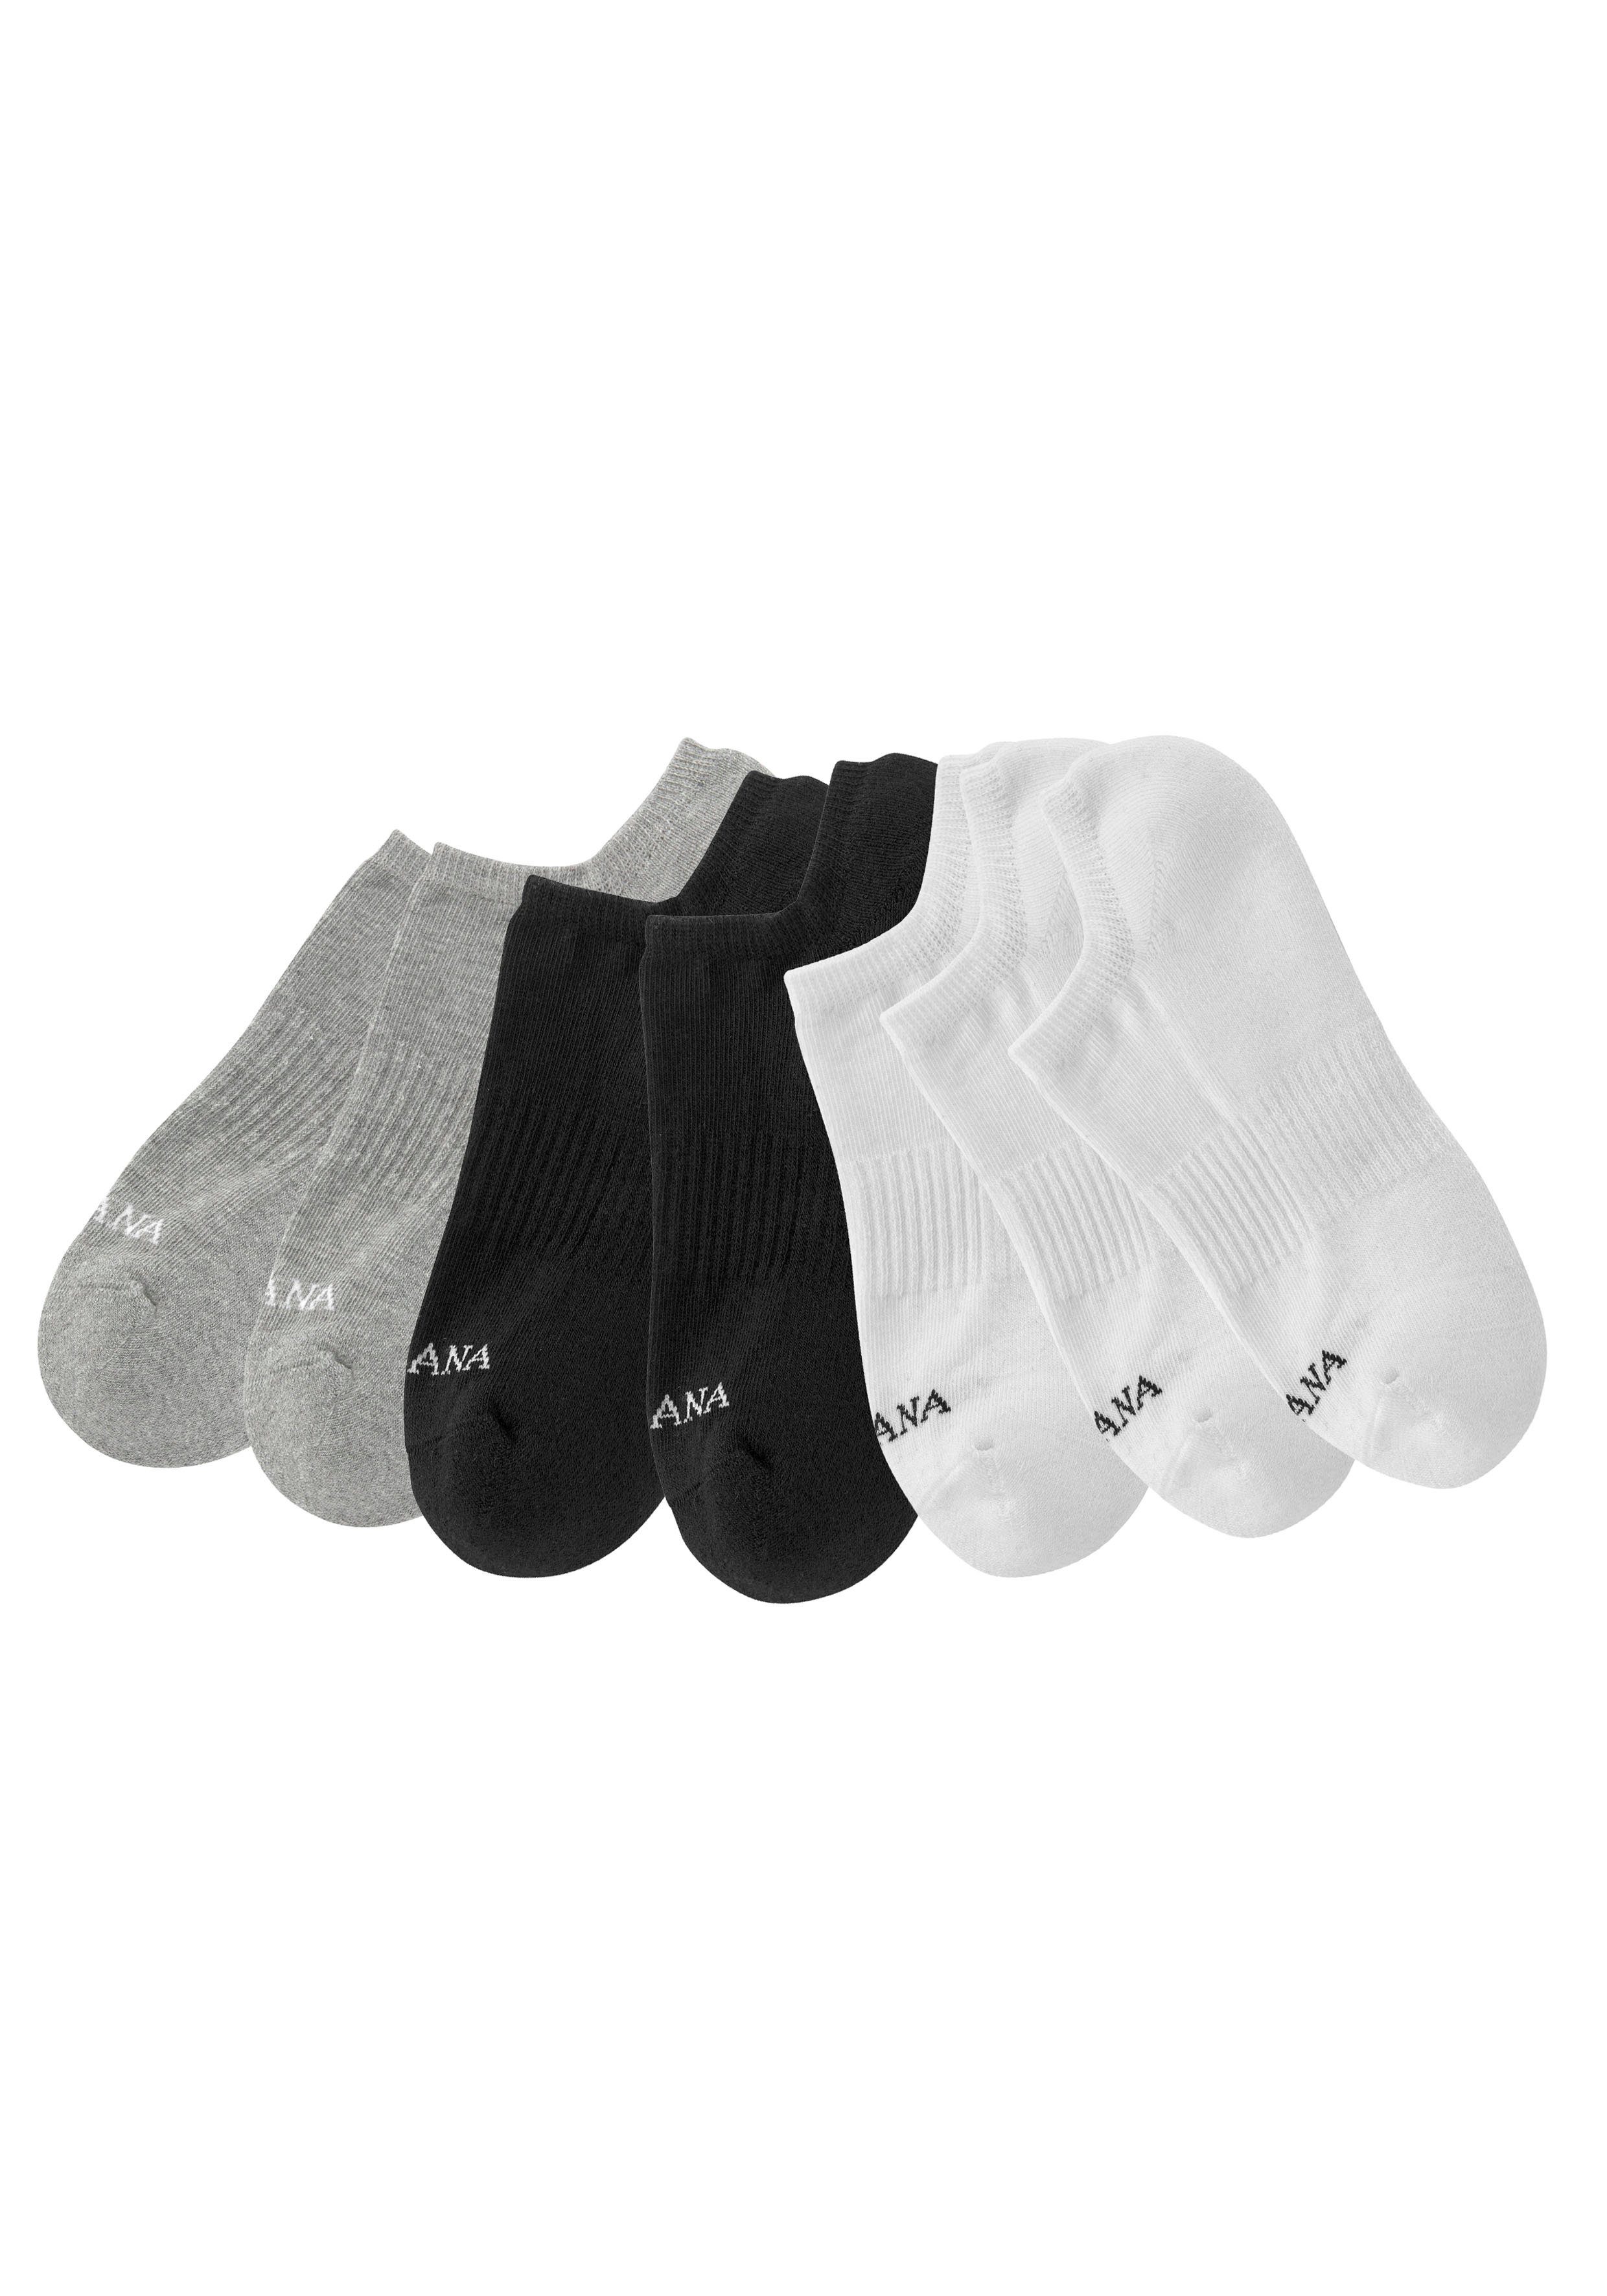 LASCANA ACTIVE Sneakersocken mit 3x grau-meliert 7-Paar) Fußfrottee 2x (Set, 2x schwarz, weiß